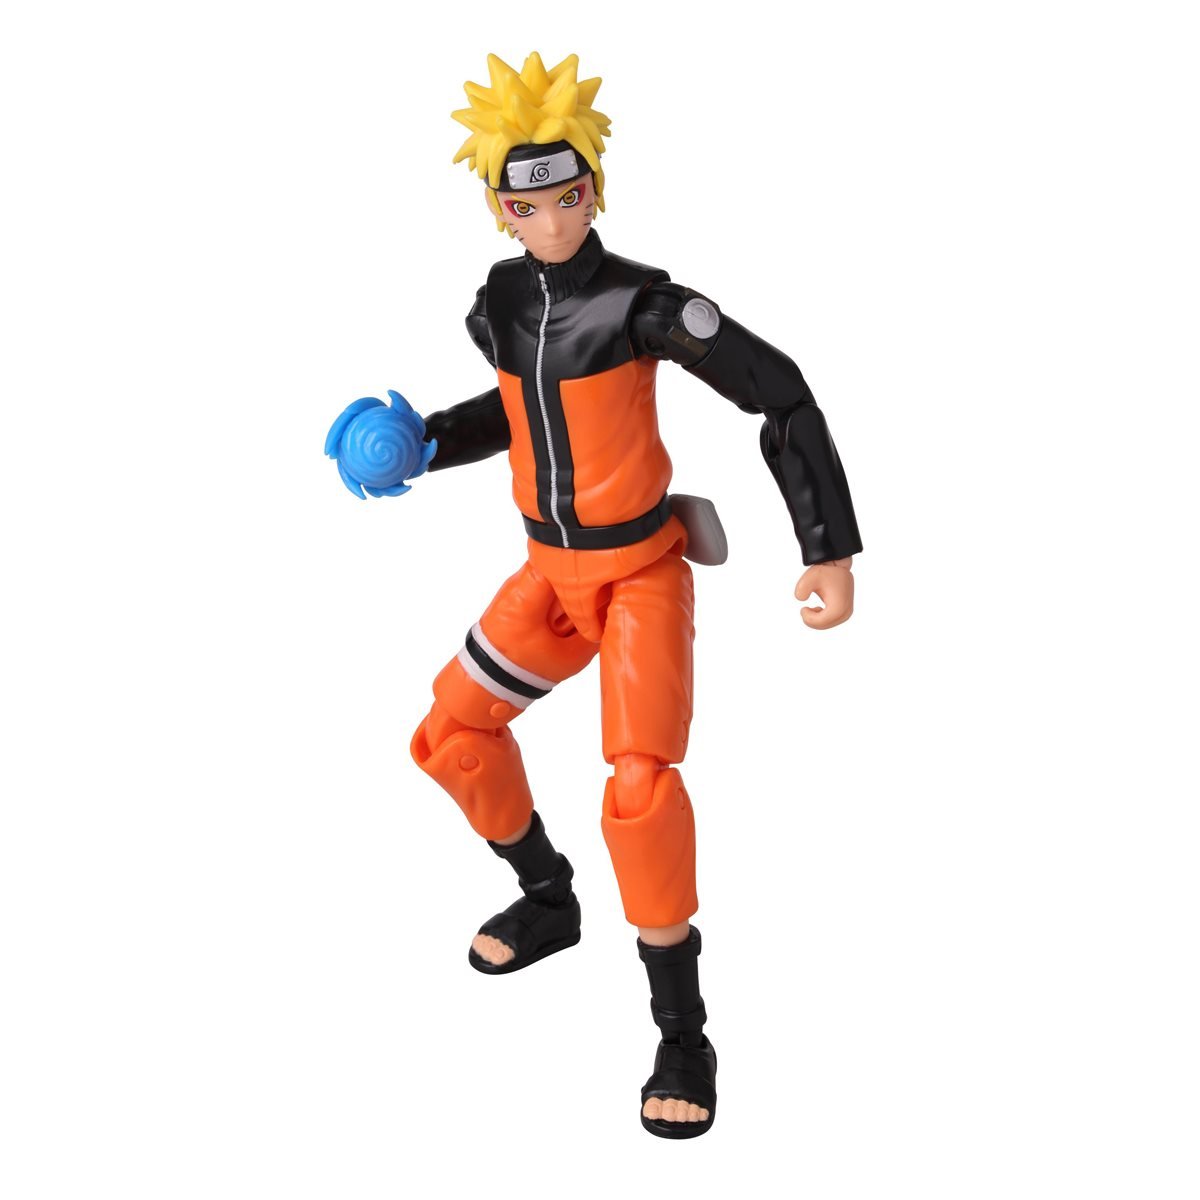 ANIME HEROES Beyond - Naruto - Naruto Uzumaki Action Figure